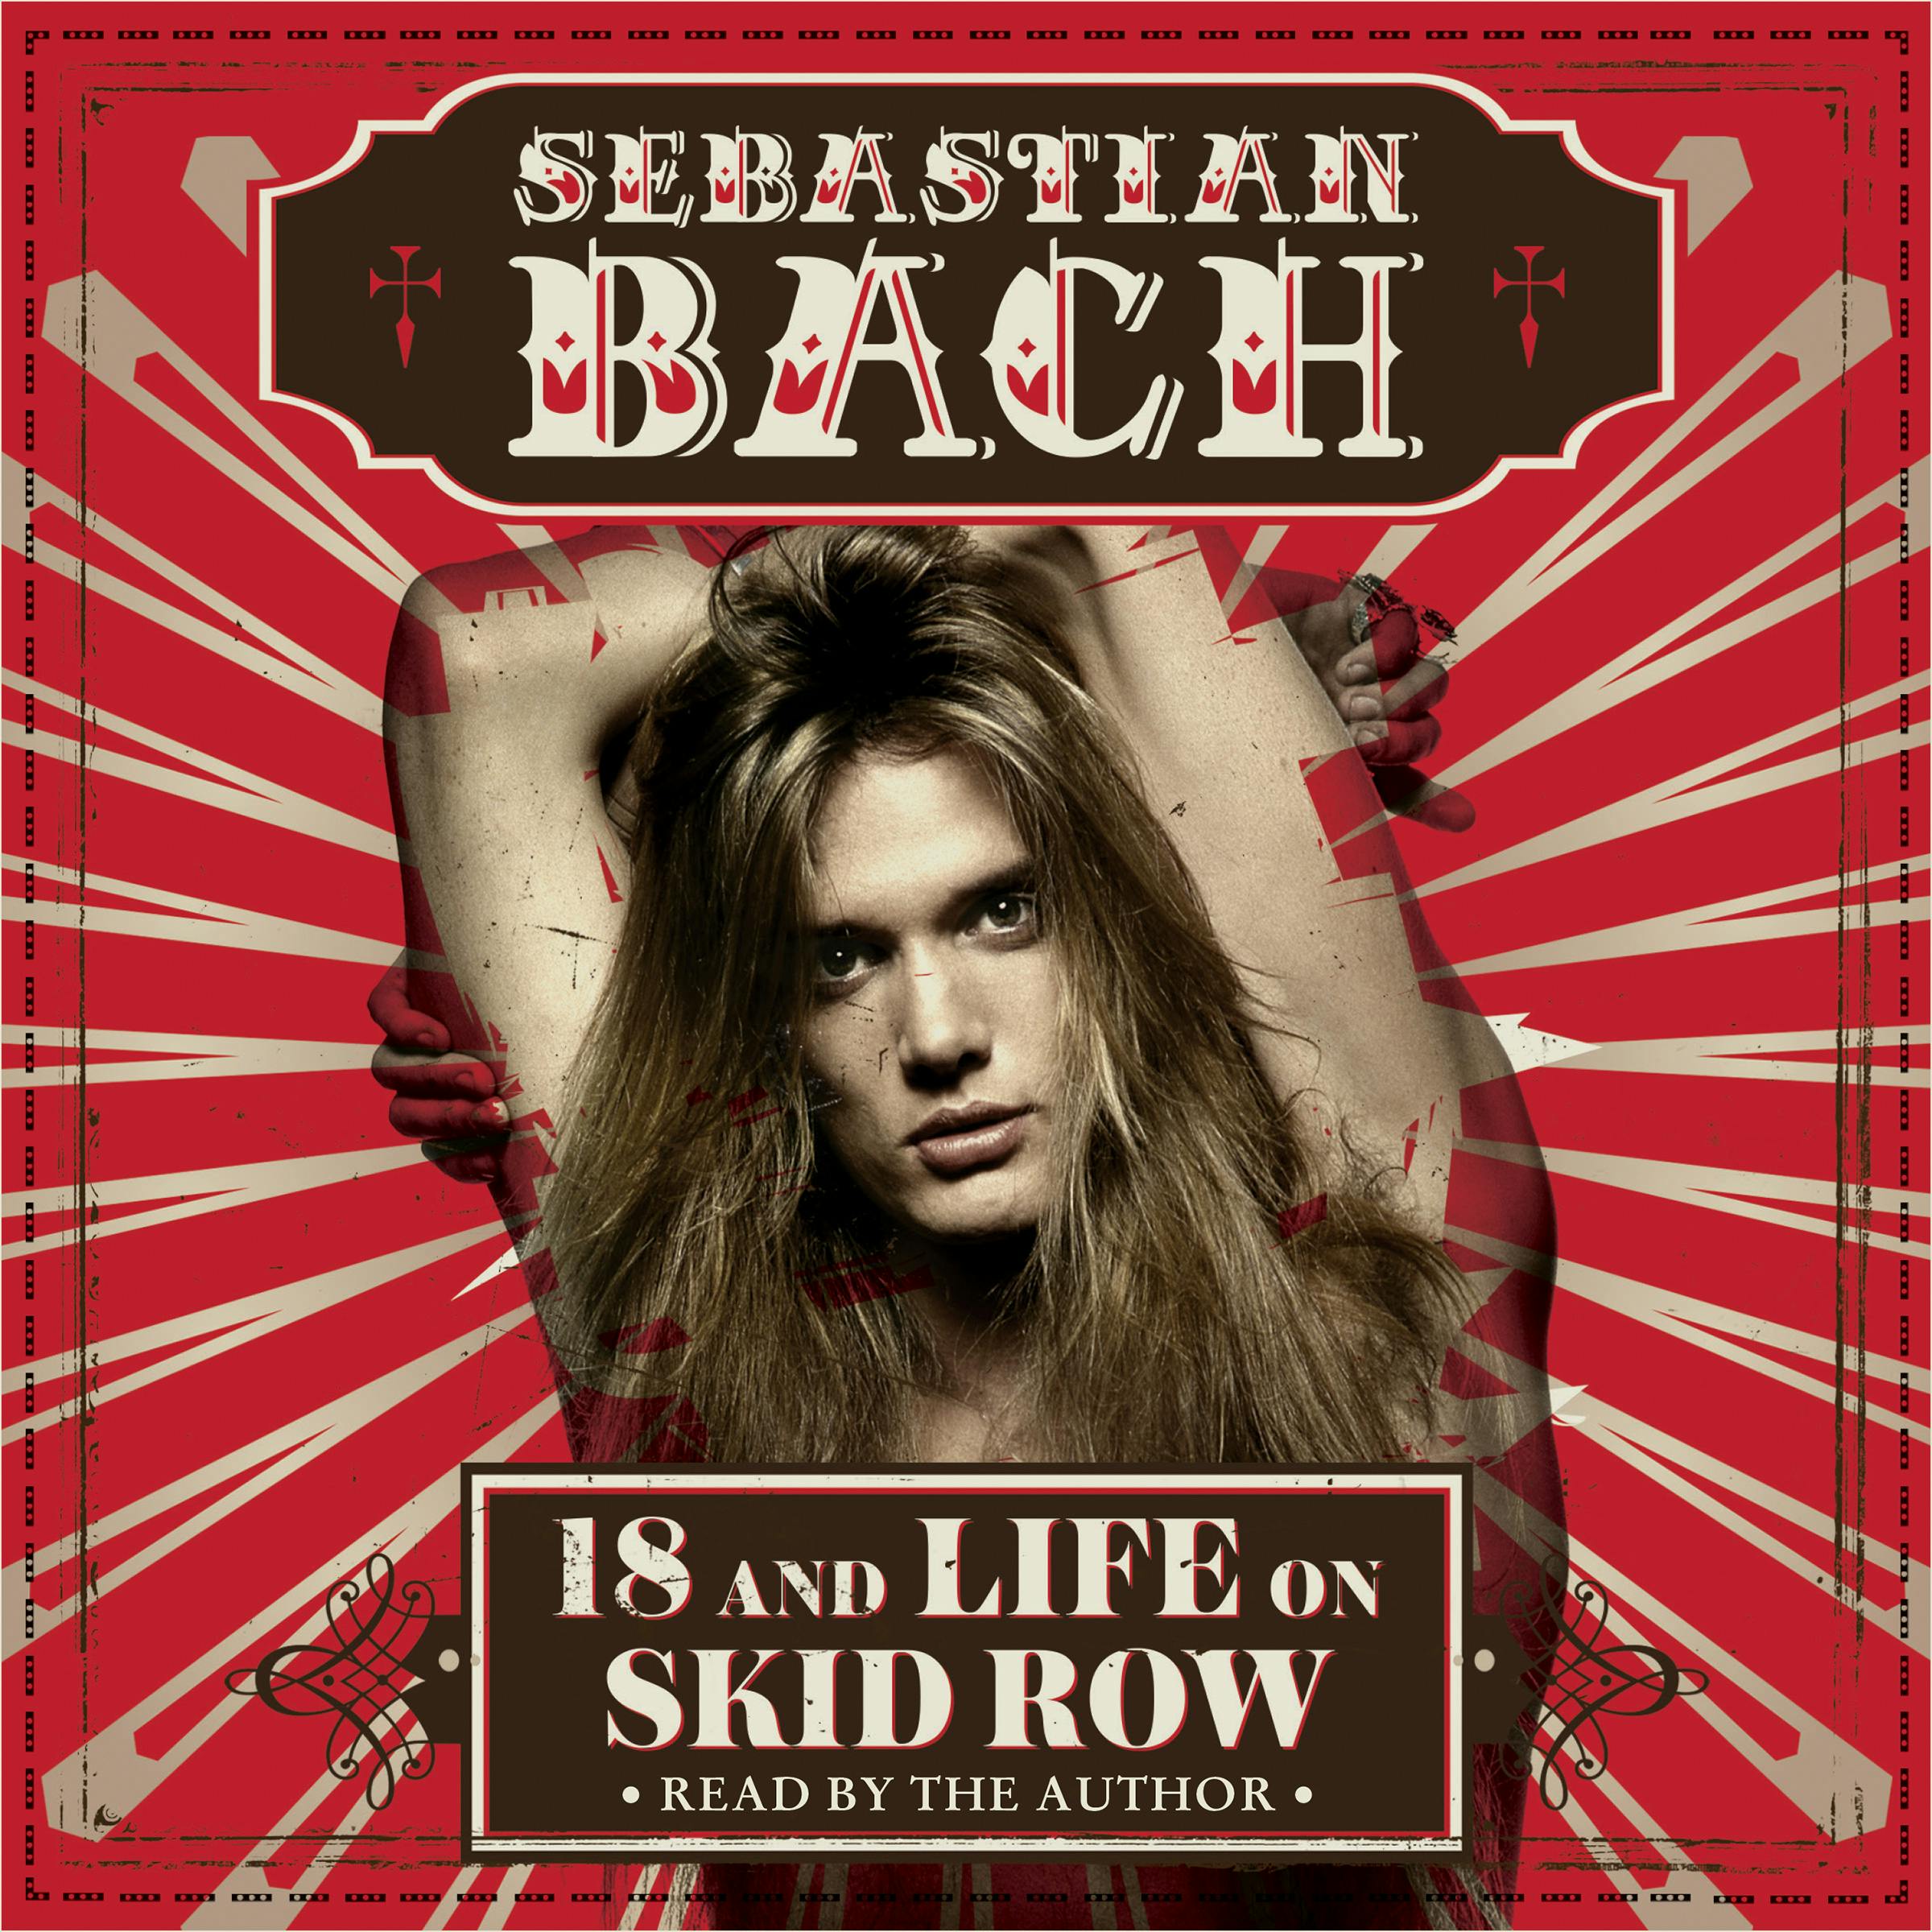 18 and Life on Skid Row - Sebastian Bach